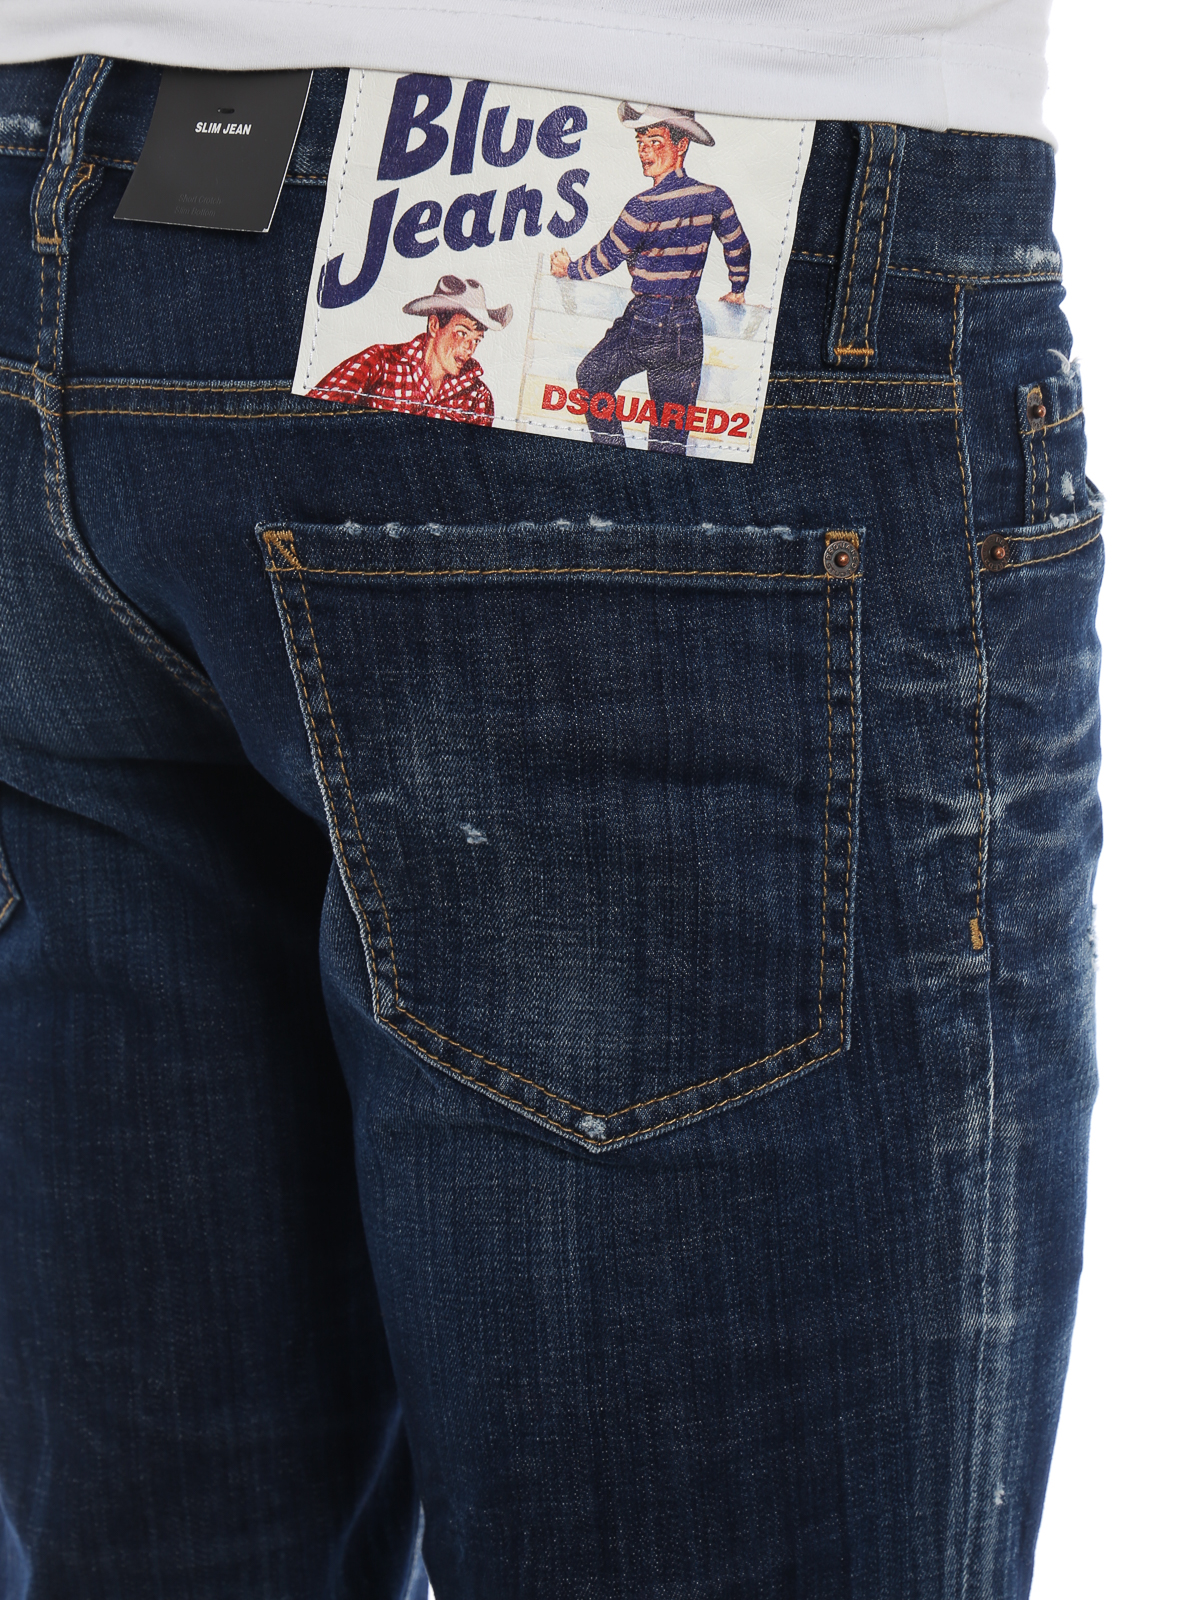 dsquared jeans logo